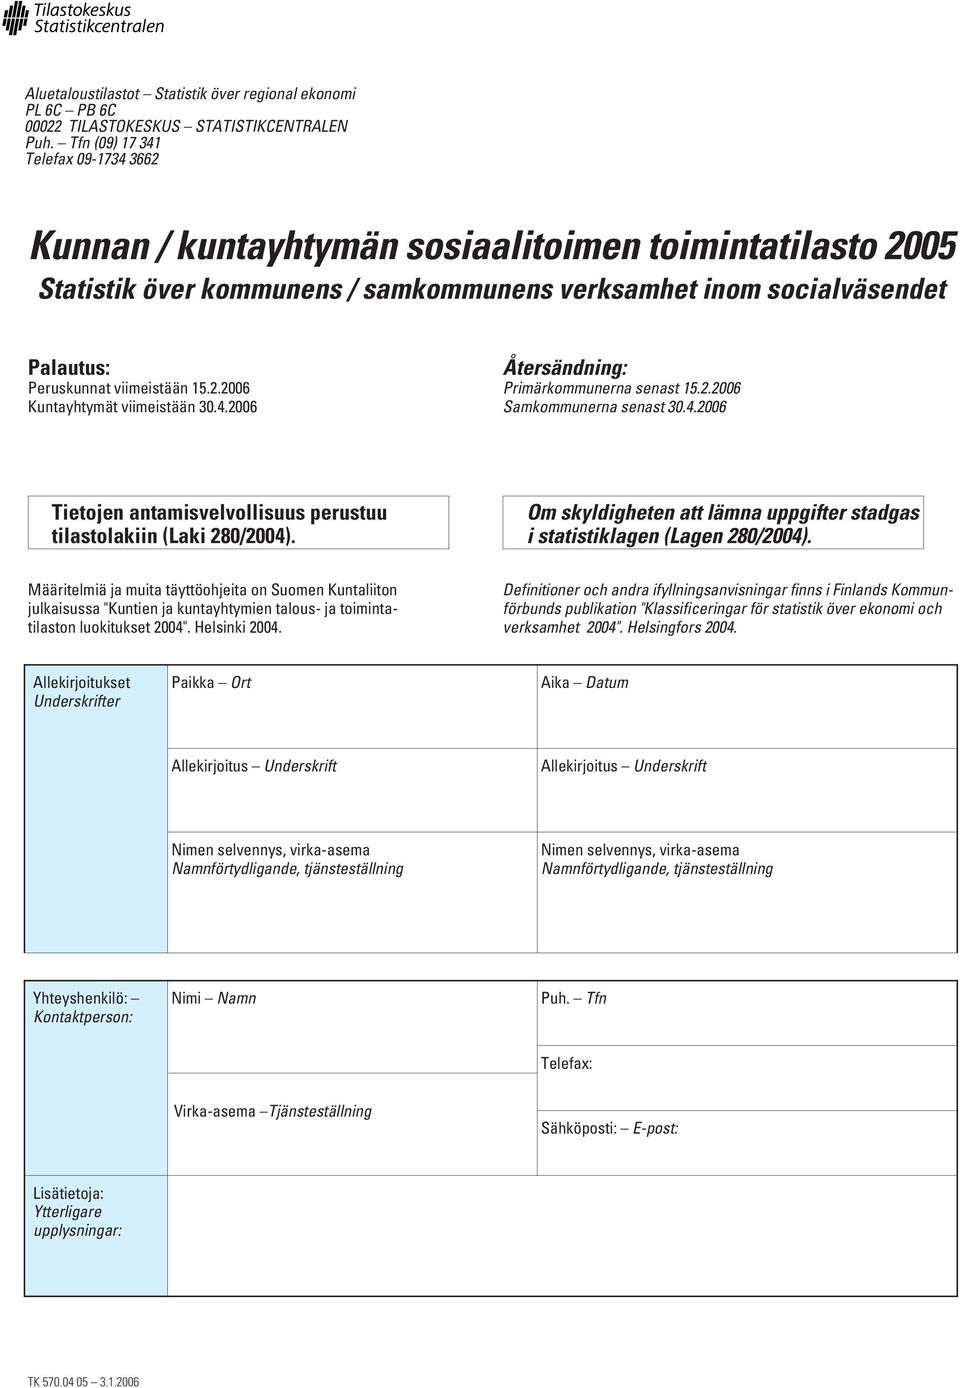 15.2.2006 Kuntayhtymät viimeistään 30.4.2006 Återsändning: Primärkommunerna senast 15.2.2006 Samkommunerna senast 30.4.2006 Tietojen antamisvelvollisuus perustuu tilastolakiin (Laki 280/2004).